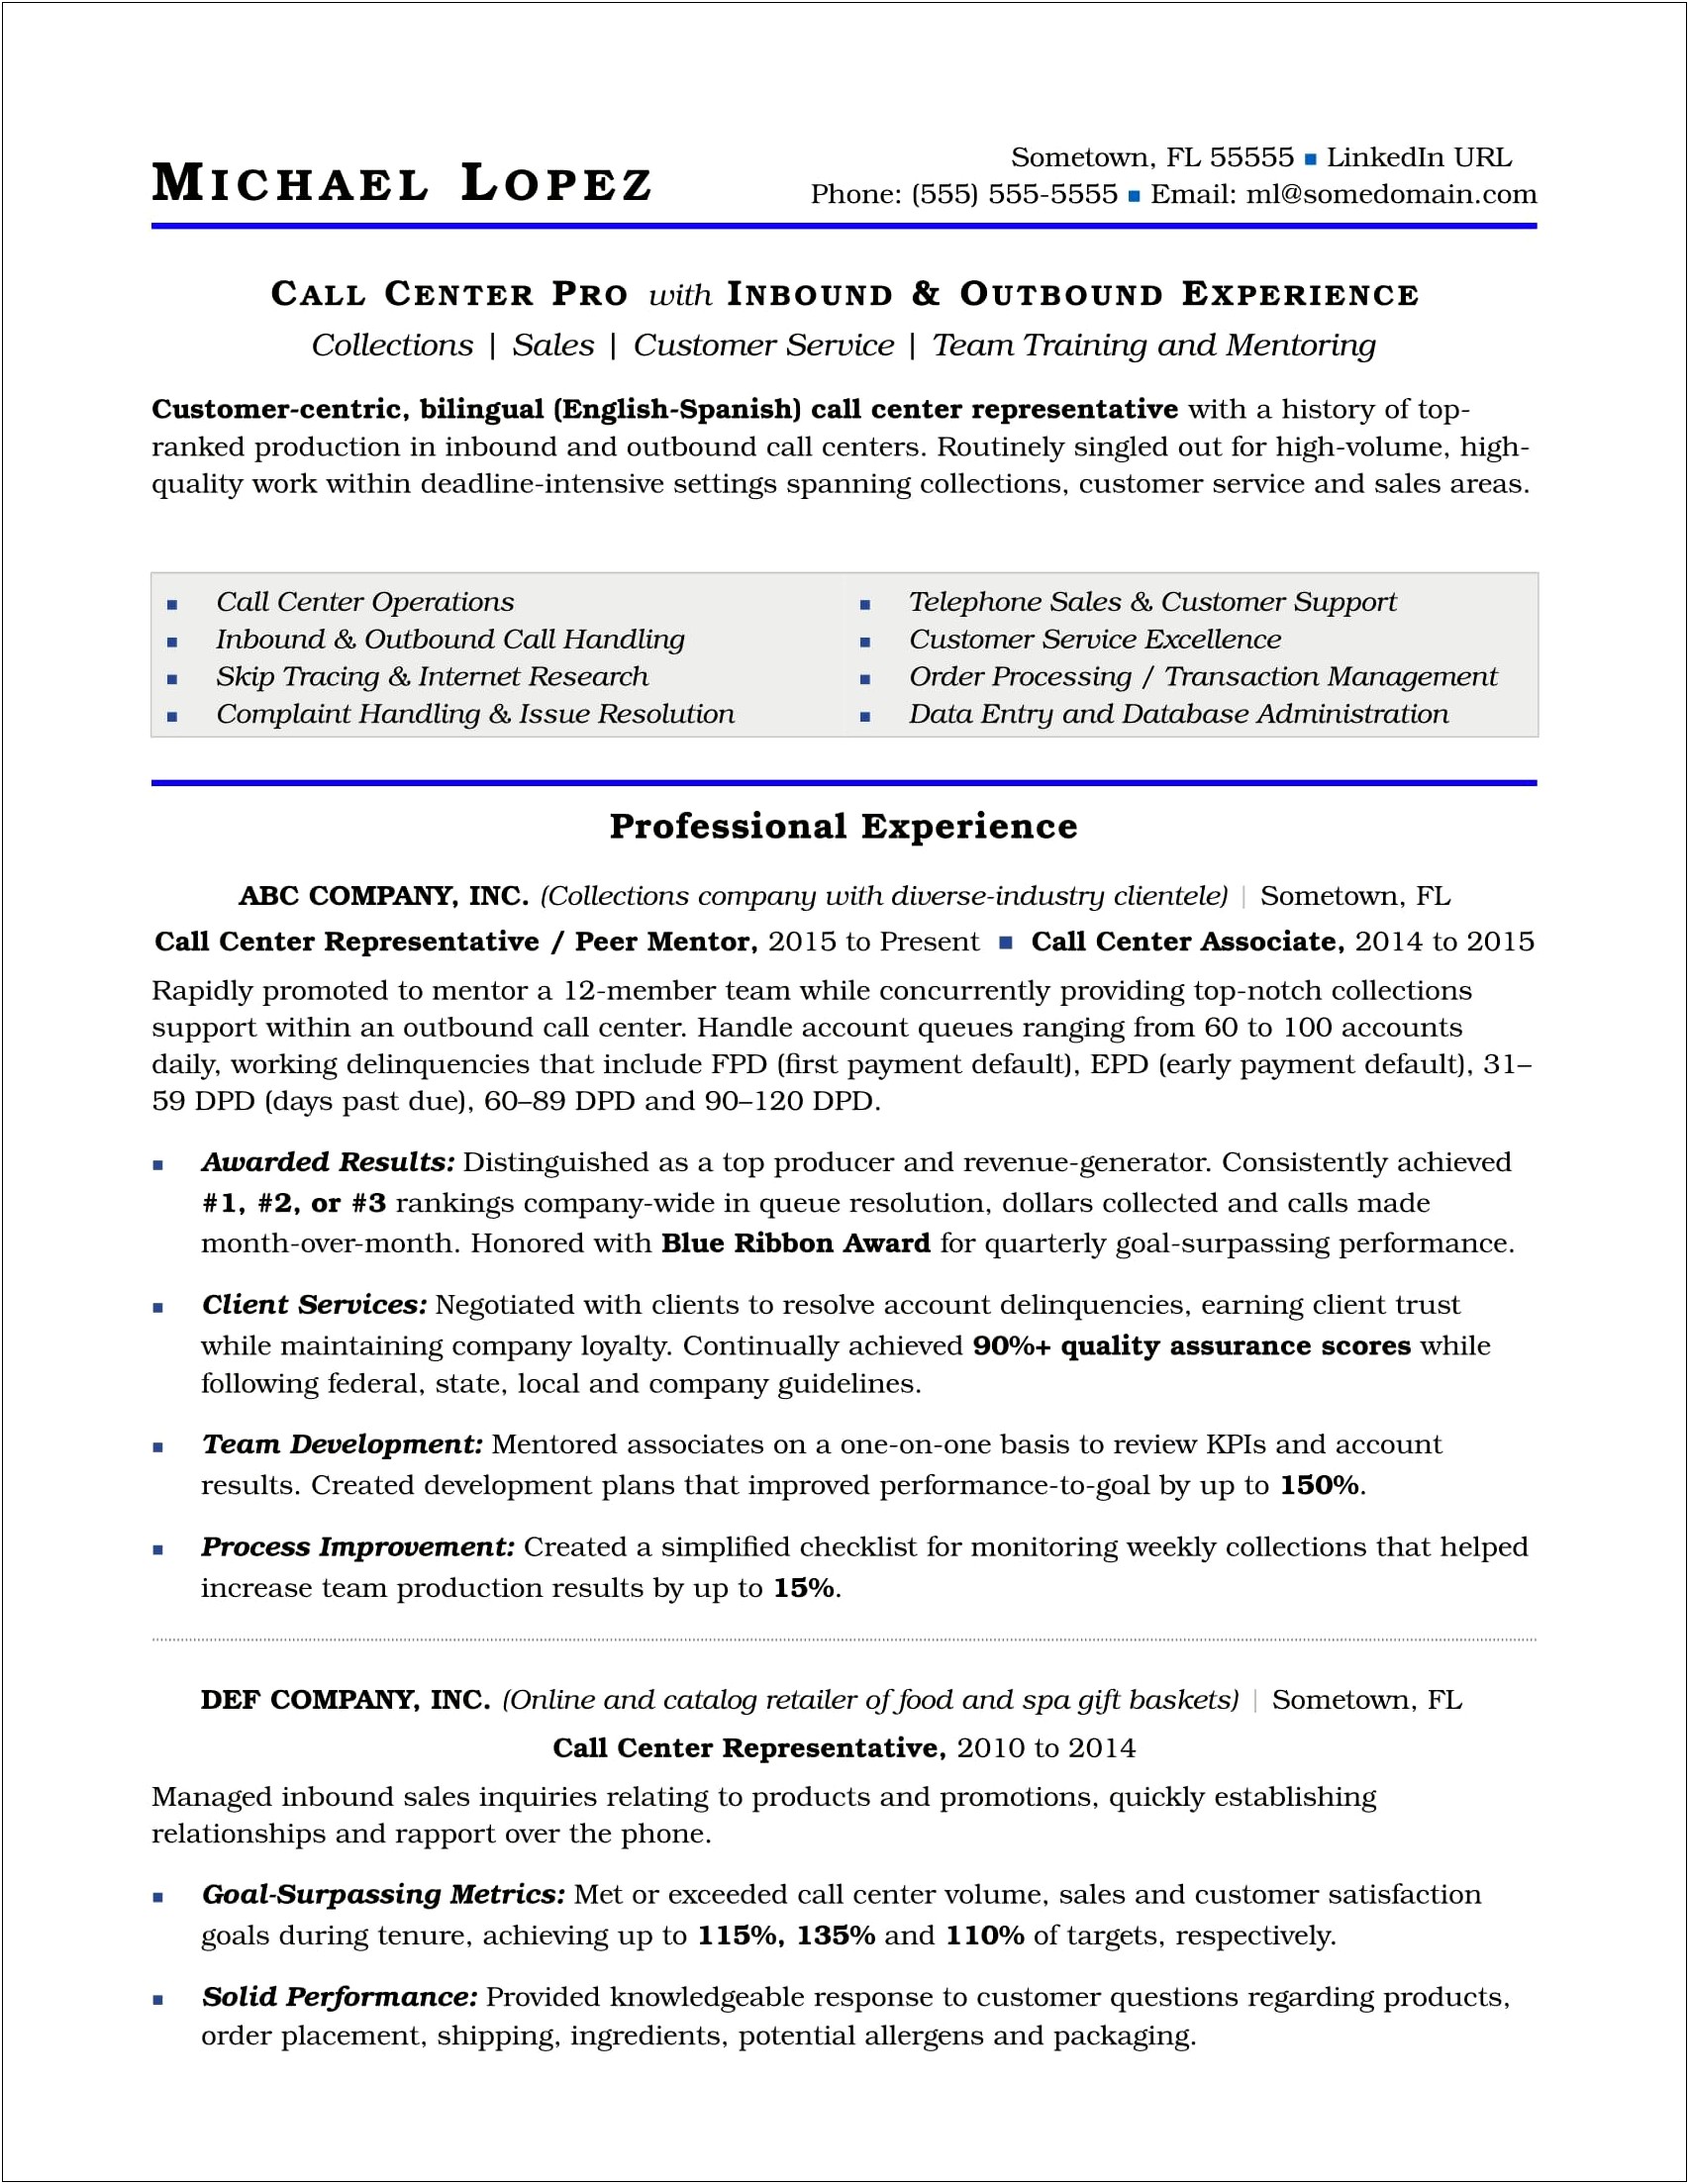 Resume Objective Samples Entry Level Customer Service